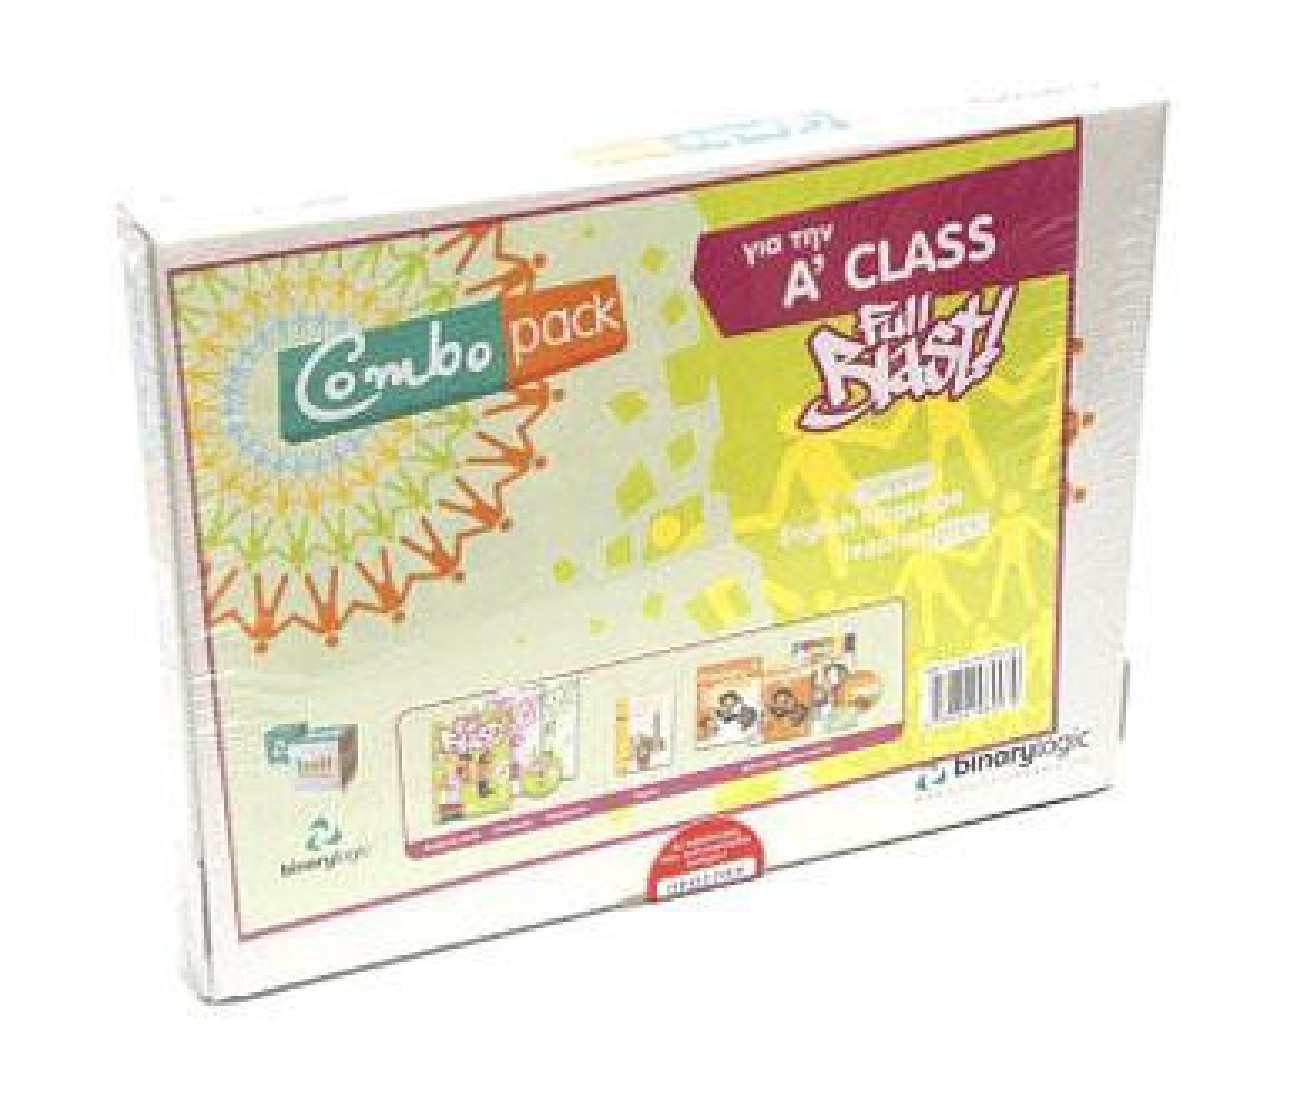 COMBO PACK A CLASS (FULL BLAST)